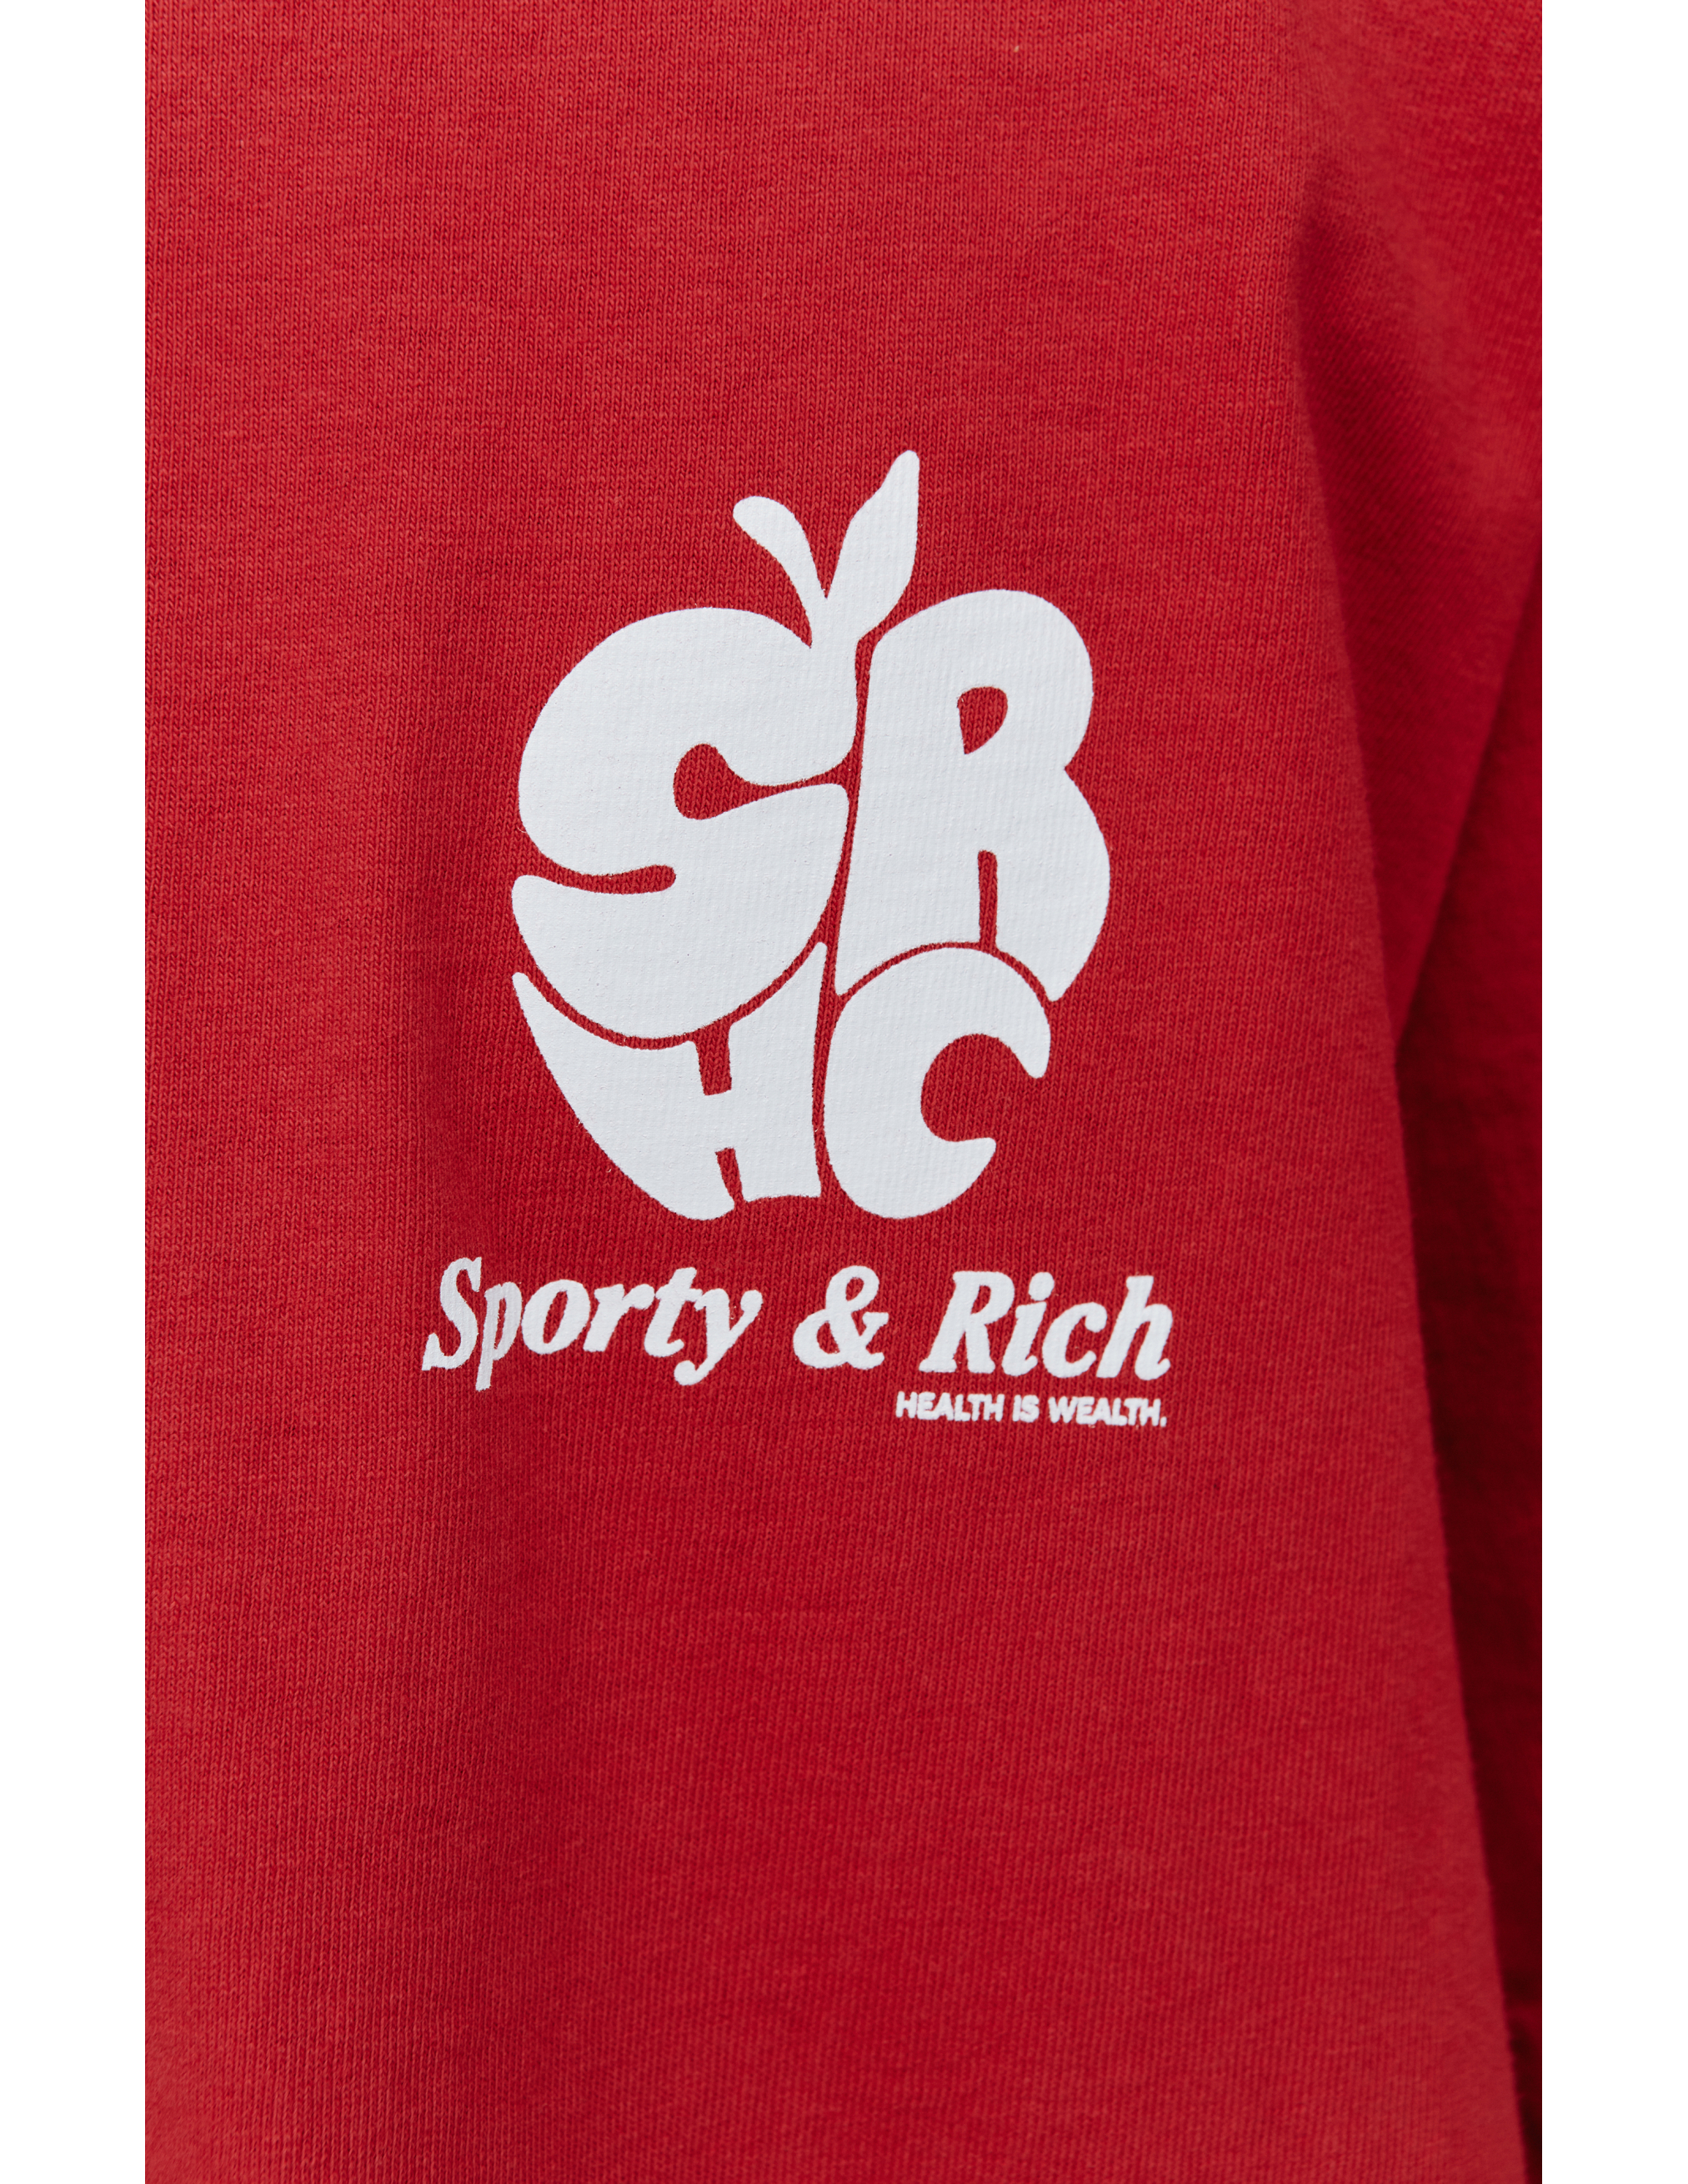 Красная футболка с принтом Apple SRHC SPORTY & RICH TS493RE, размер XL;L;M - фото 5